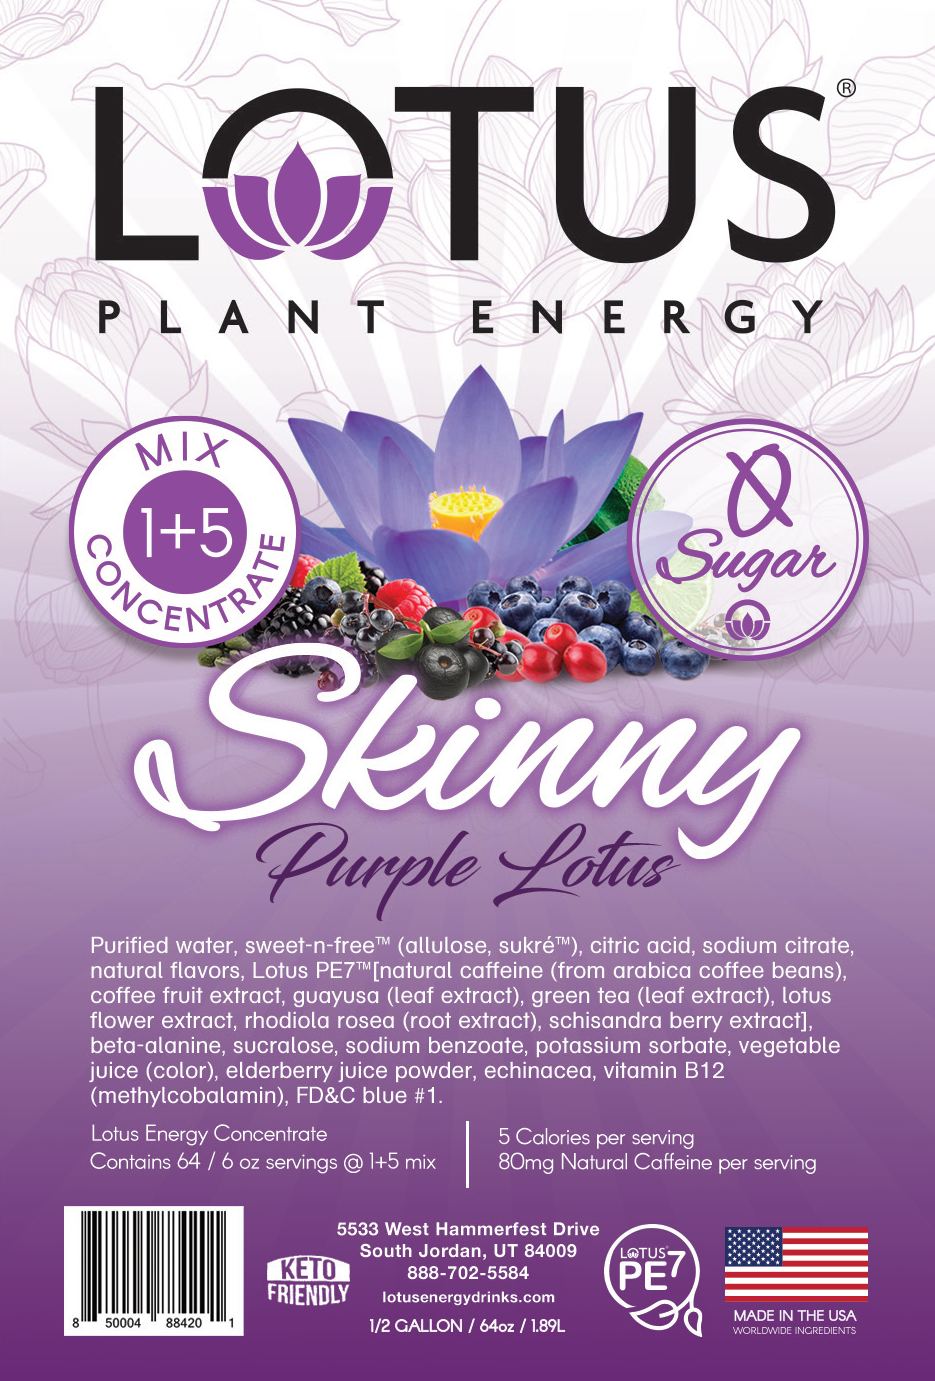 Skinny Purple Lotus Energy Concentrate